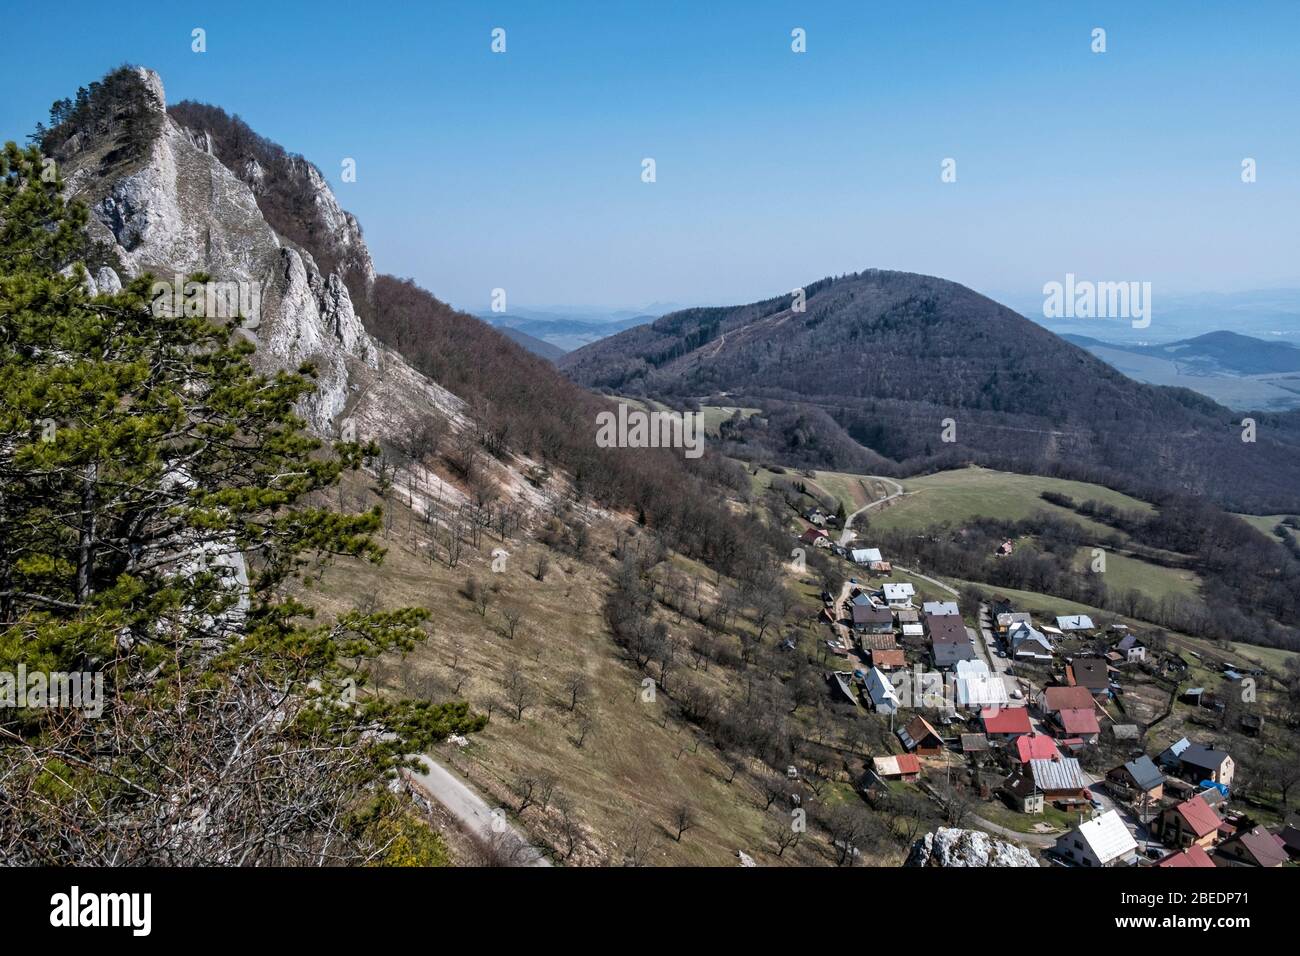 Vrsatske rocks and Vrsatske Podhradie village, White Carpathian mountains in Slovak republic. Seasonal natural scene. Hiking theme. Stock Photo